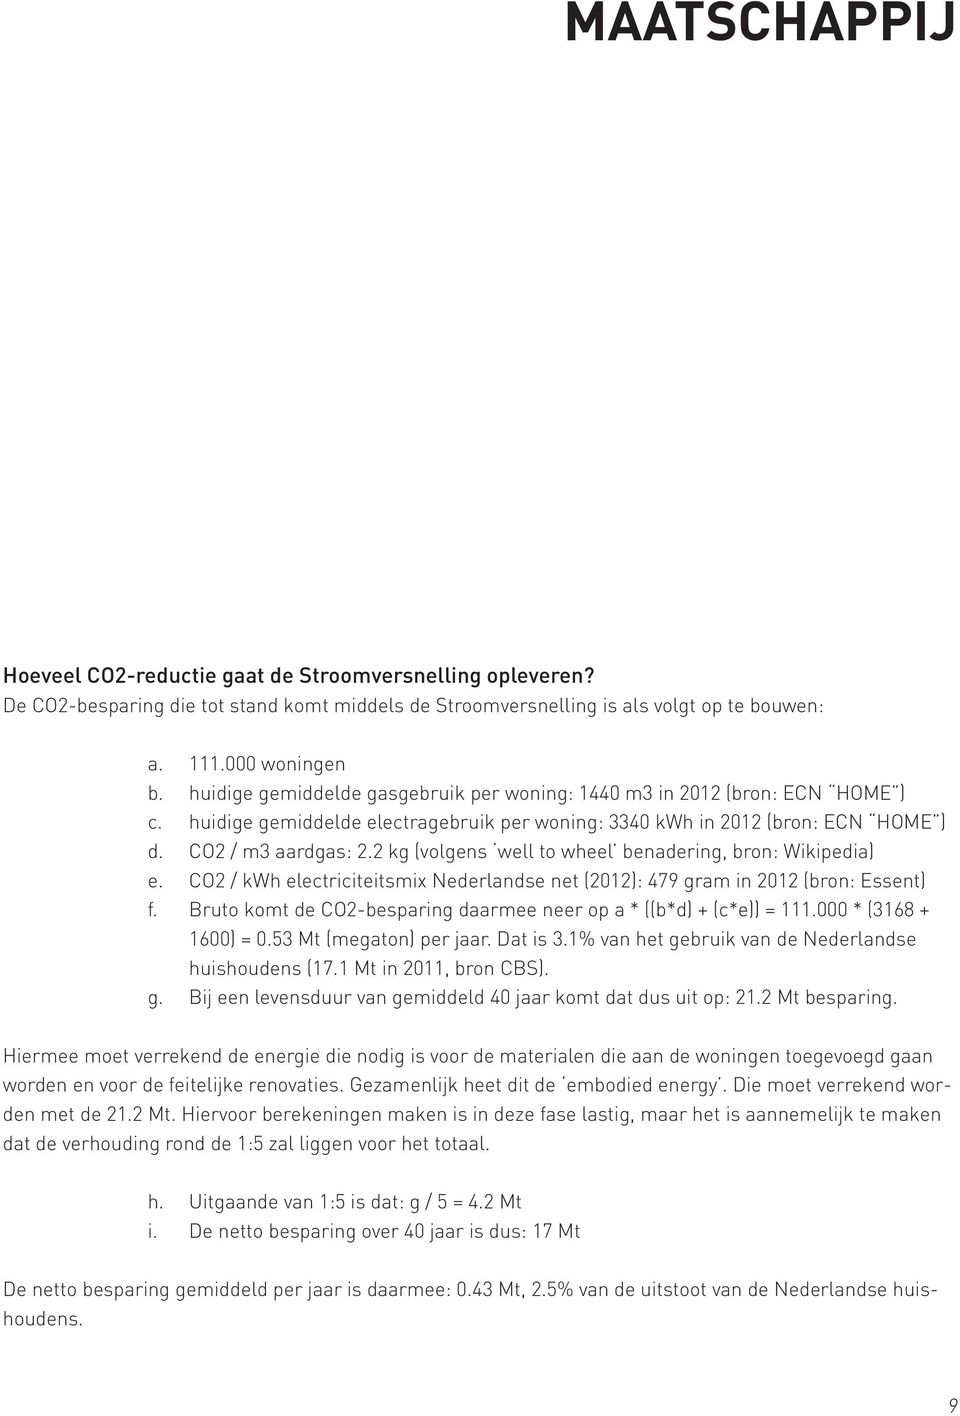 2 kg (volgens well to wheel benadering, bron: Wikipedia) e. CO2 / kwh electriciteitsmix Nederlandse net (2012): 479 gram in 2012 (bron: Essent) f.